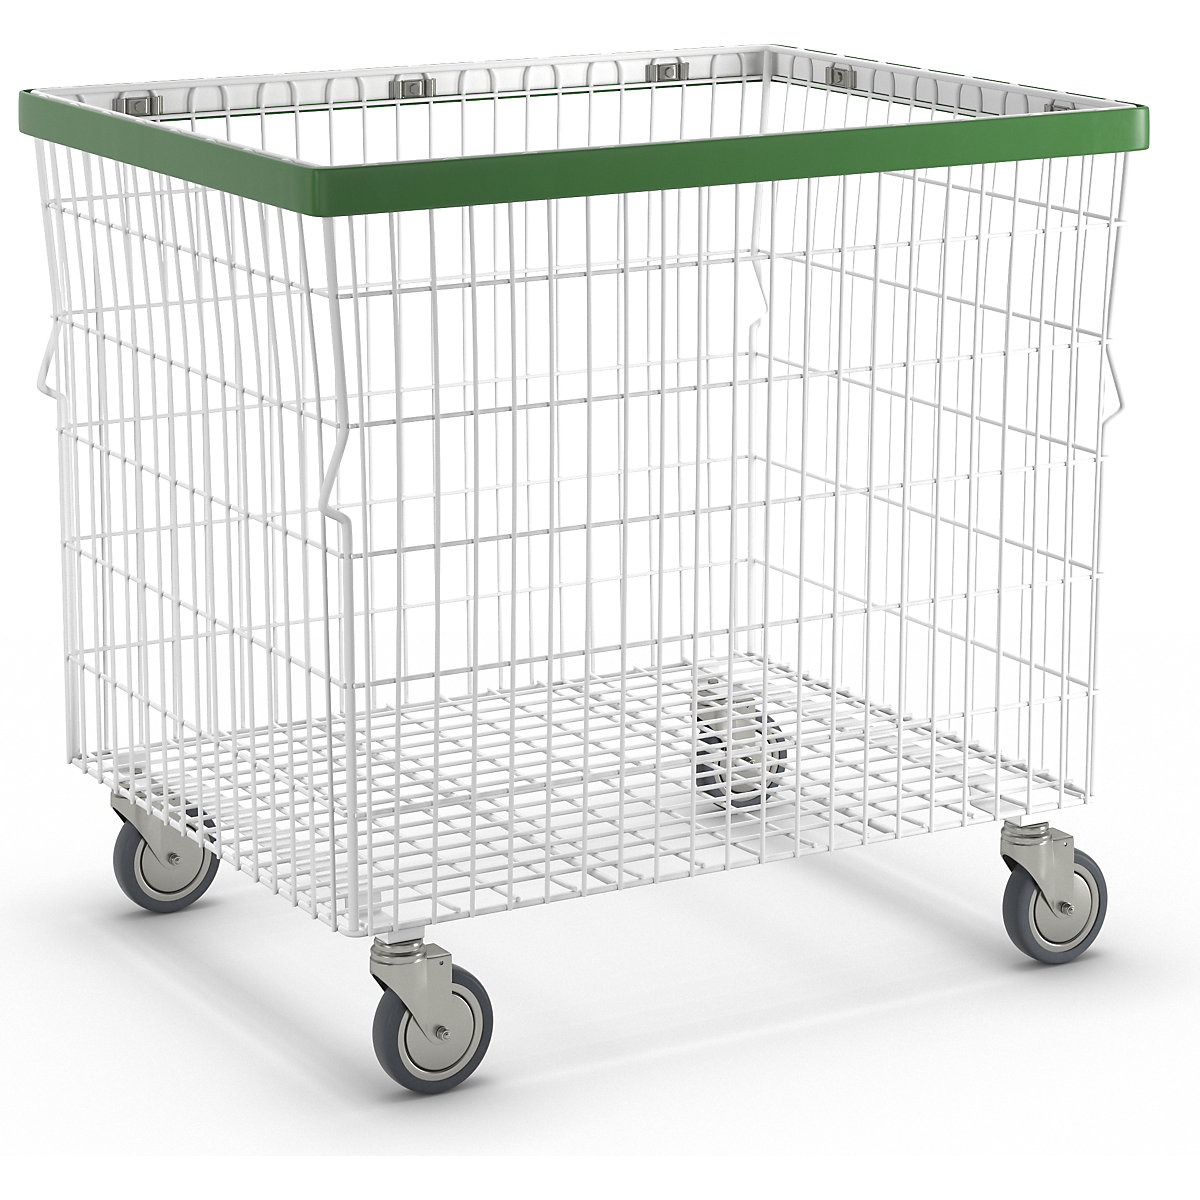 Storage and transport basket